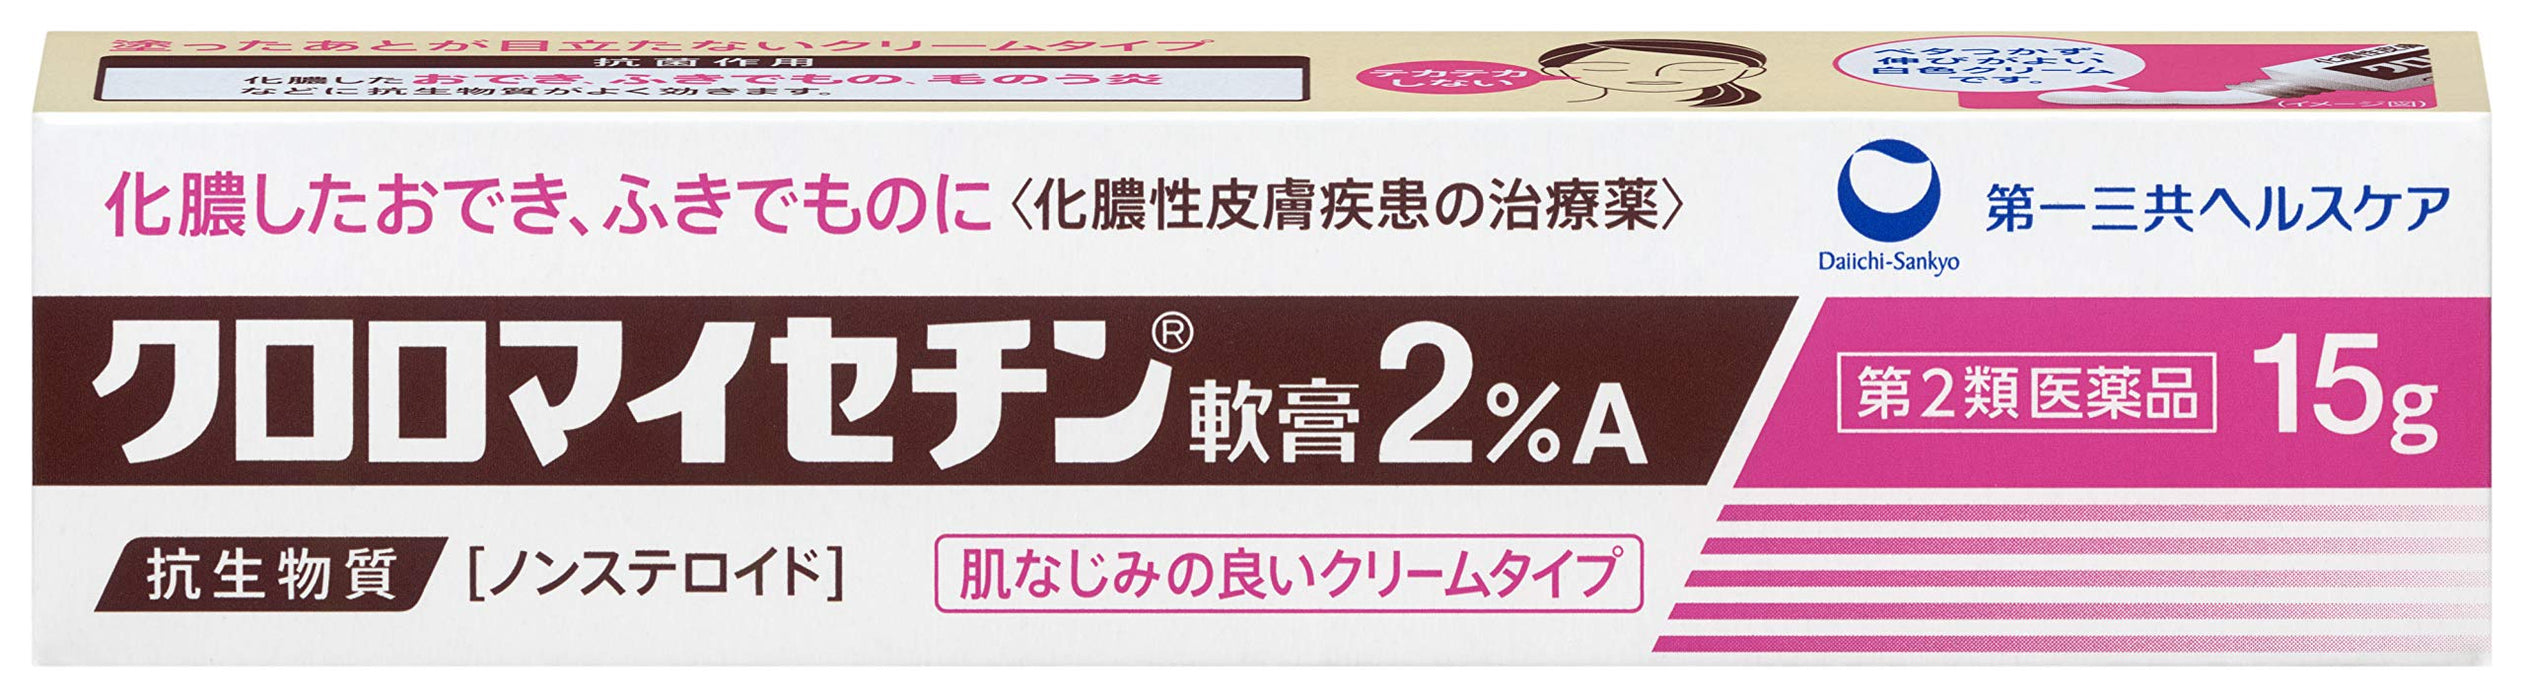 Kuromai 氯霉素软膏 2%A 15G 日本 - 2 种药品